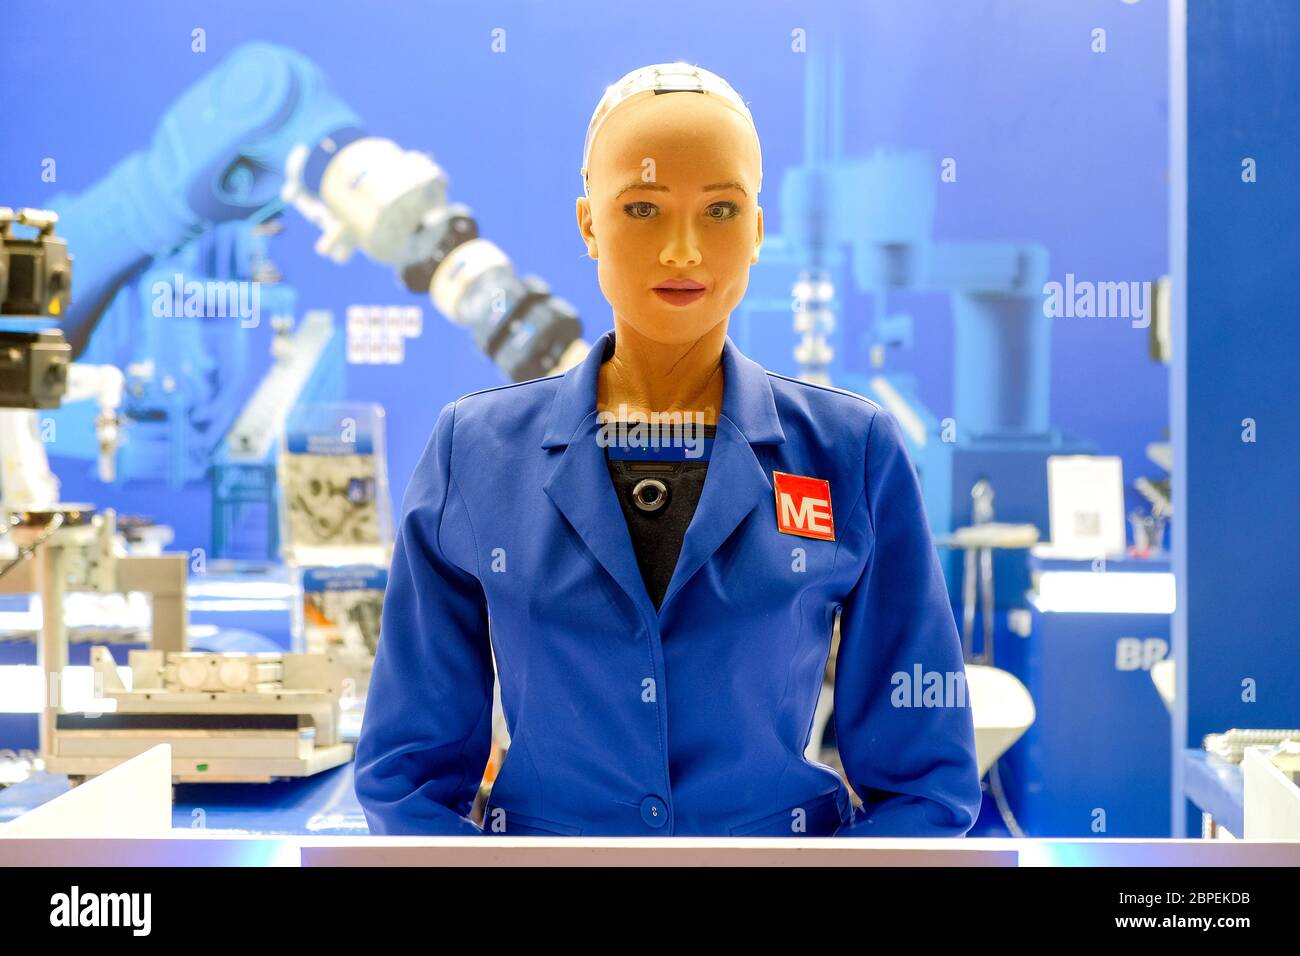 Bangkok-Thailand JUN 22 2018: Sophia robot on blue engineer shirt, she has came show in Manufacturing Expo at Bitec Bangna, Thailand Stock Photo